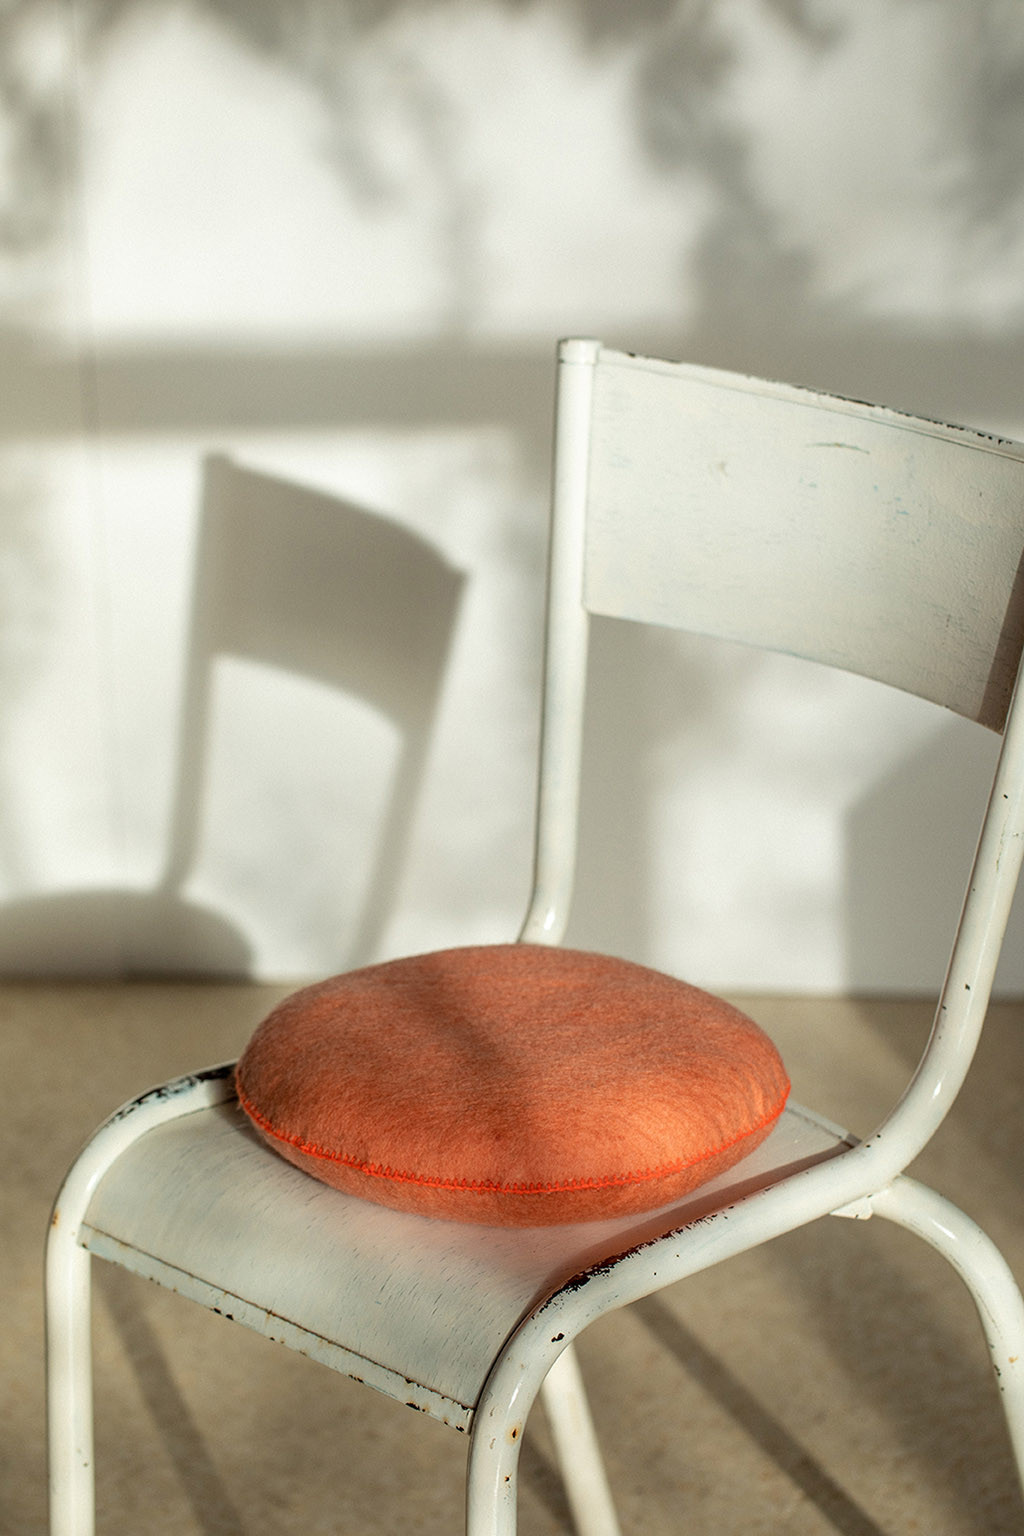 Round litchee cushion in felt on a white chair